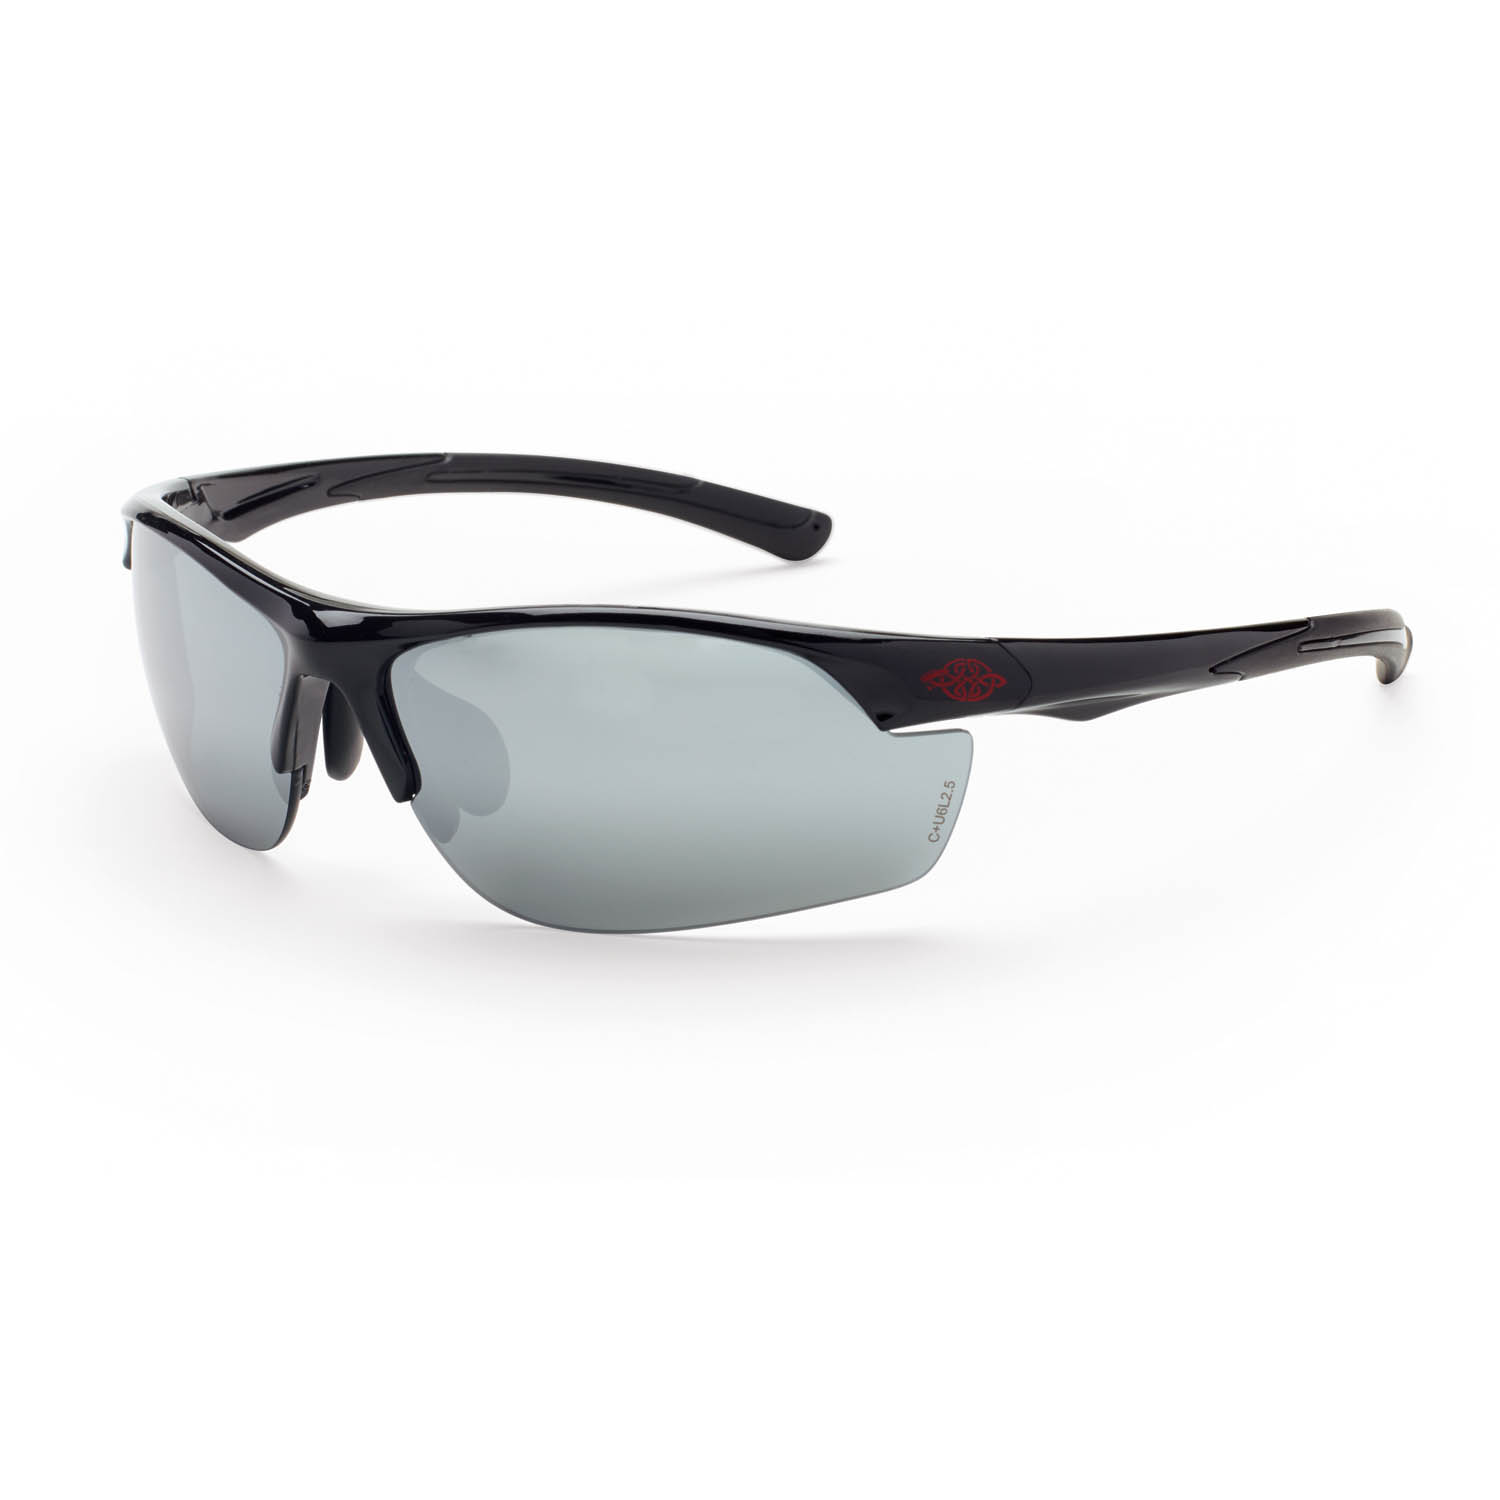 AR3 Premium Safety Eyewear - Shiny Black Frame - Silver Mirror Lens - Mirror Lens